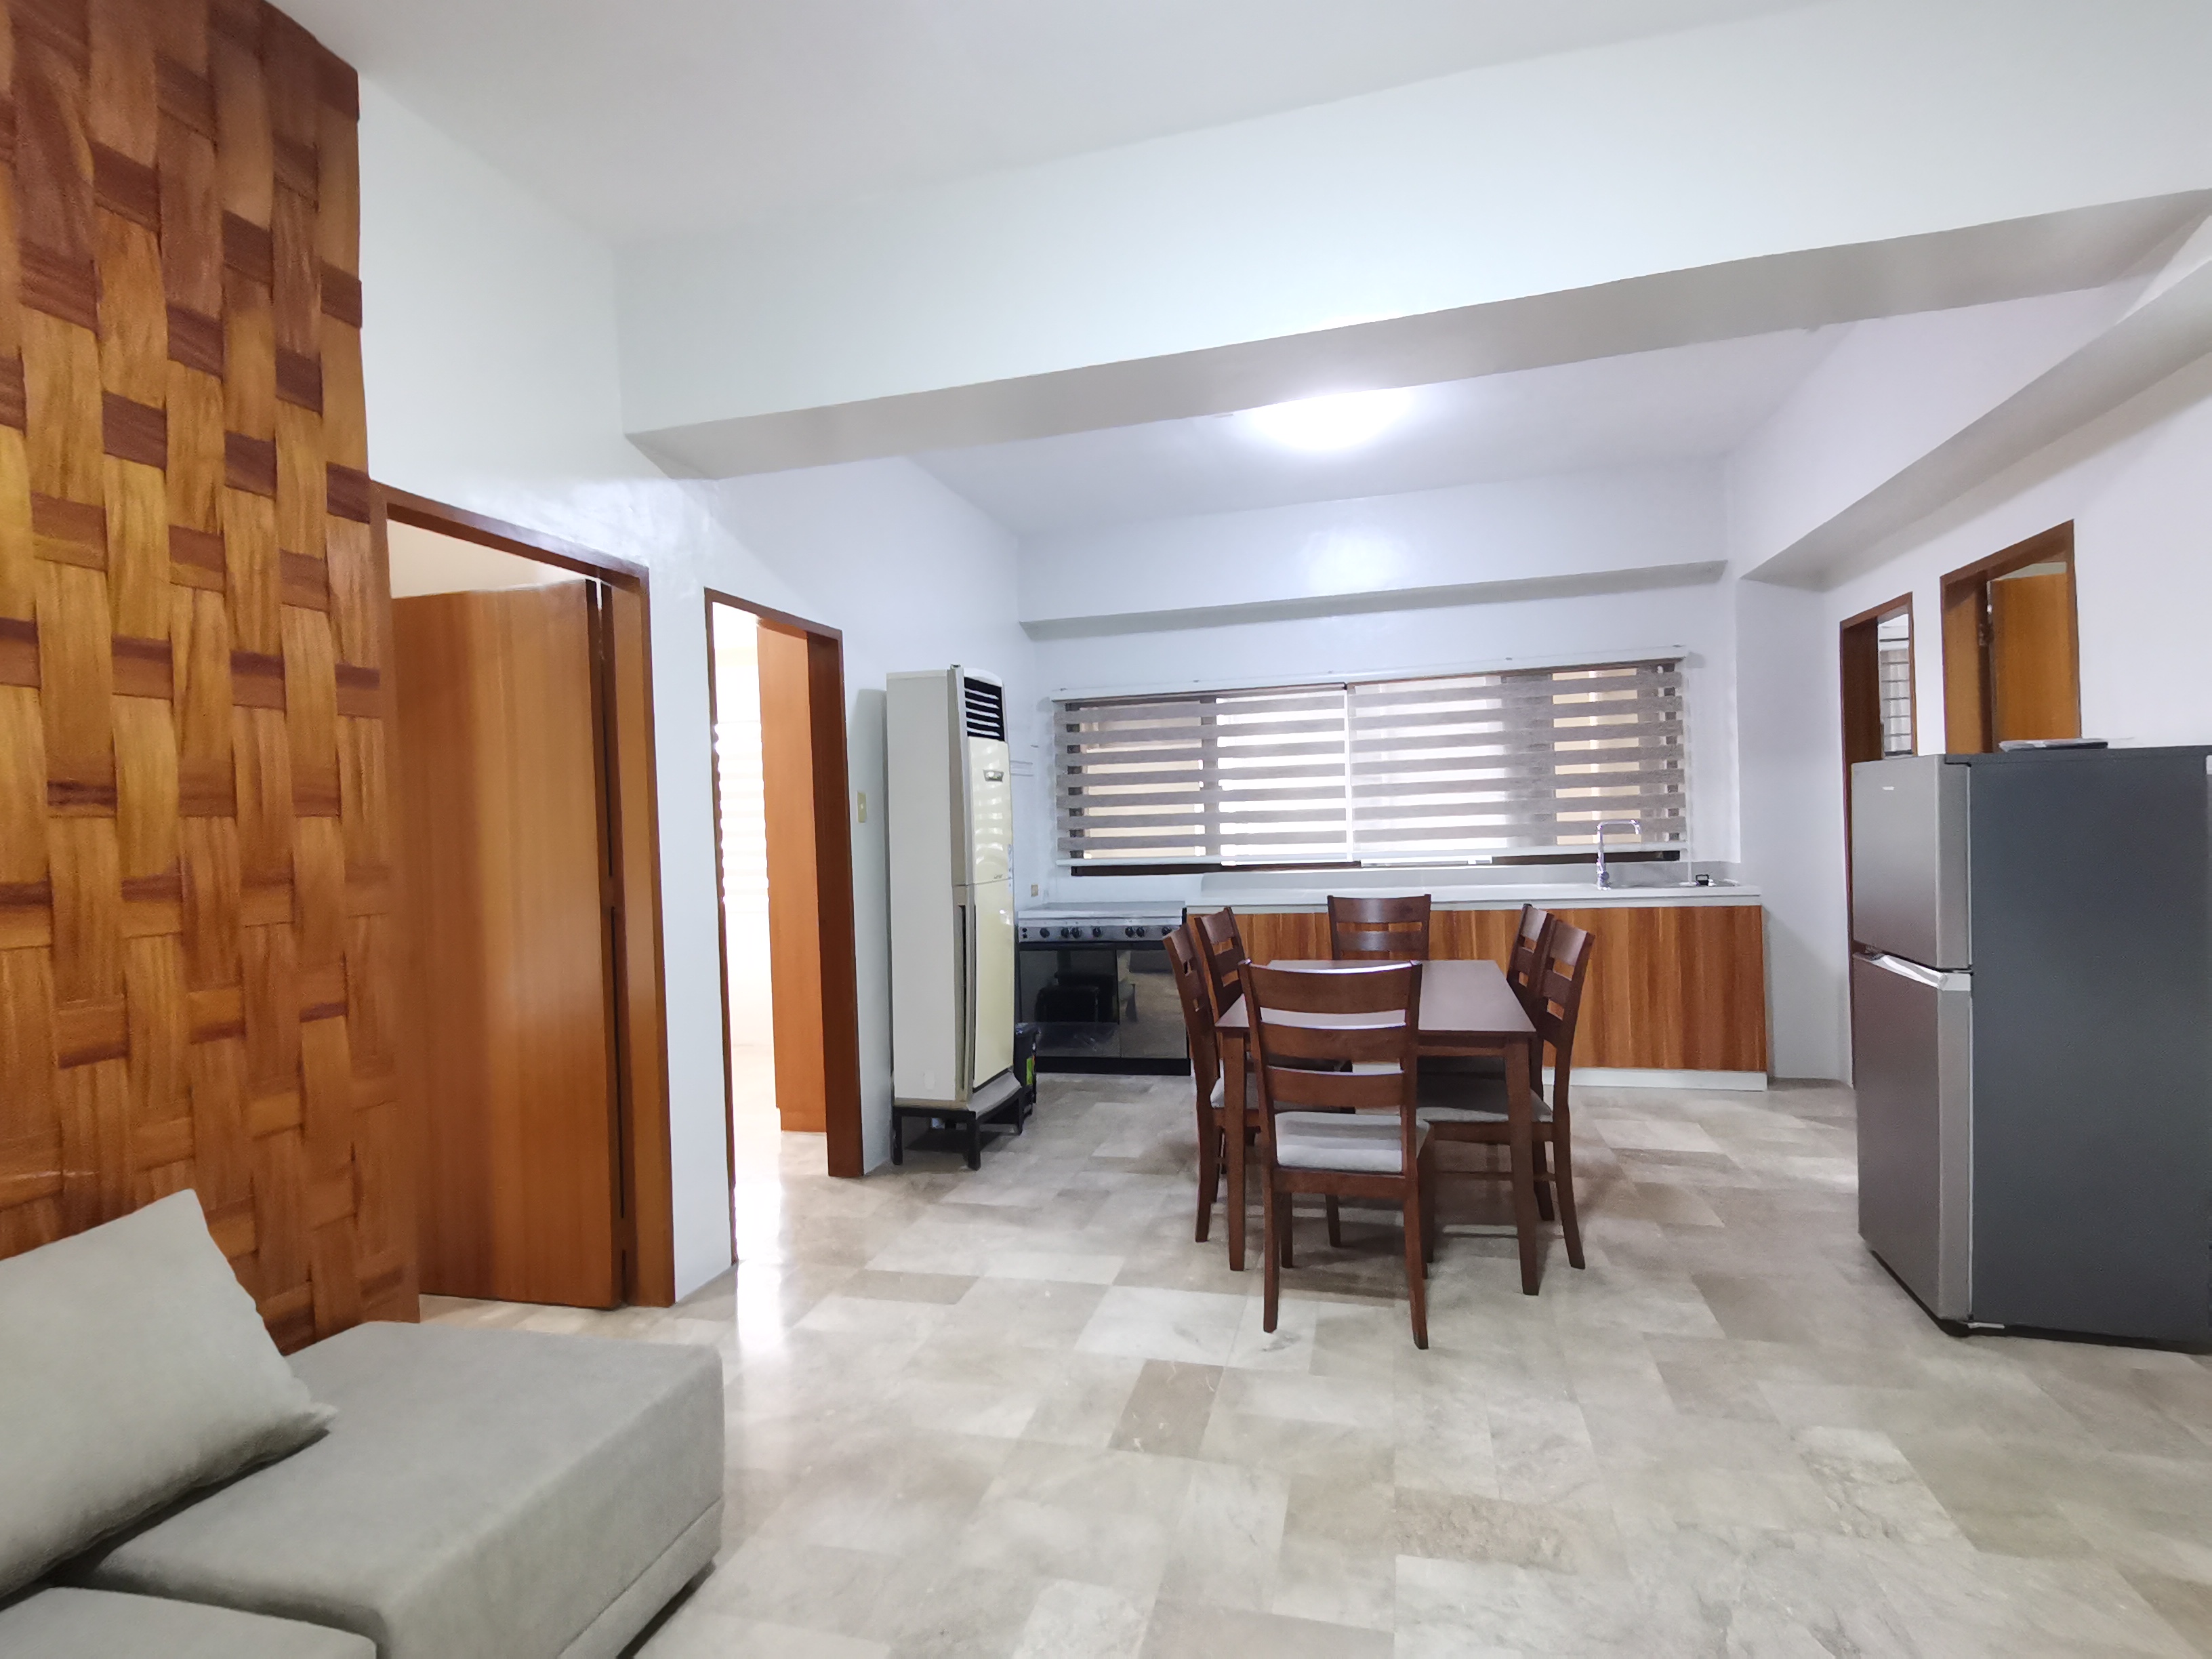 3 bedrooms apartment for rent in Cebu City near Cebu Business Park